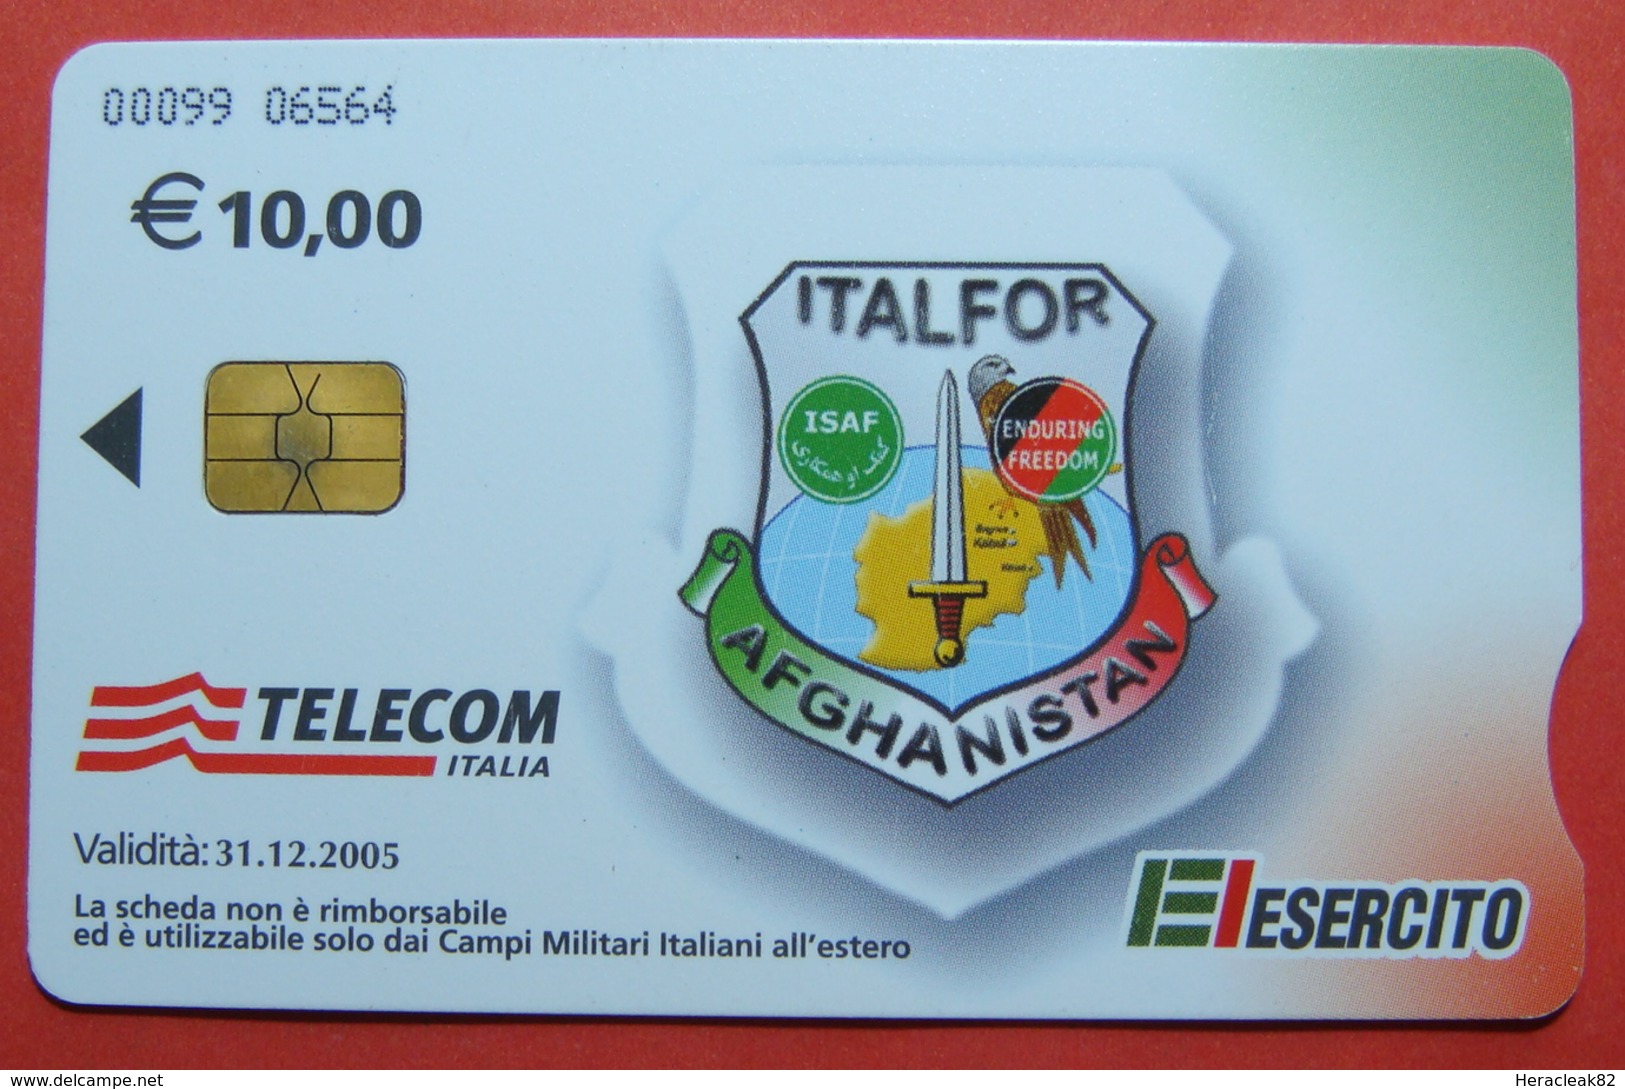 KFOR-NATO Kosovo Italian Army In AFGHANISTAN CHIP Phonecard, 10 Euro. TELECOM Italia, *ITALFOR* # 00099 06564 RRRRRR - Afganistán